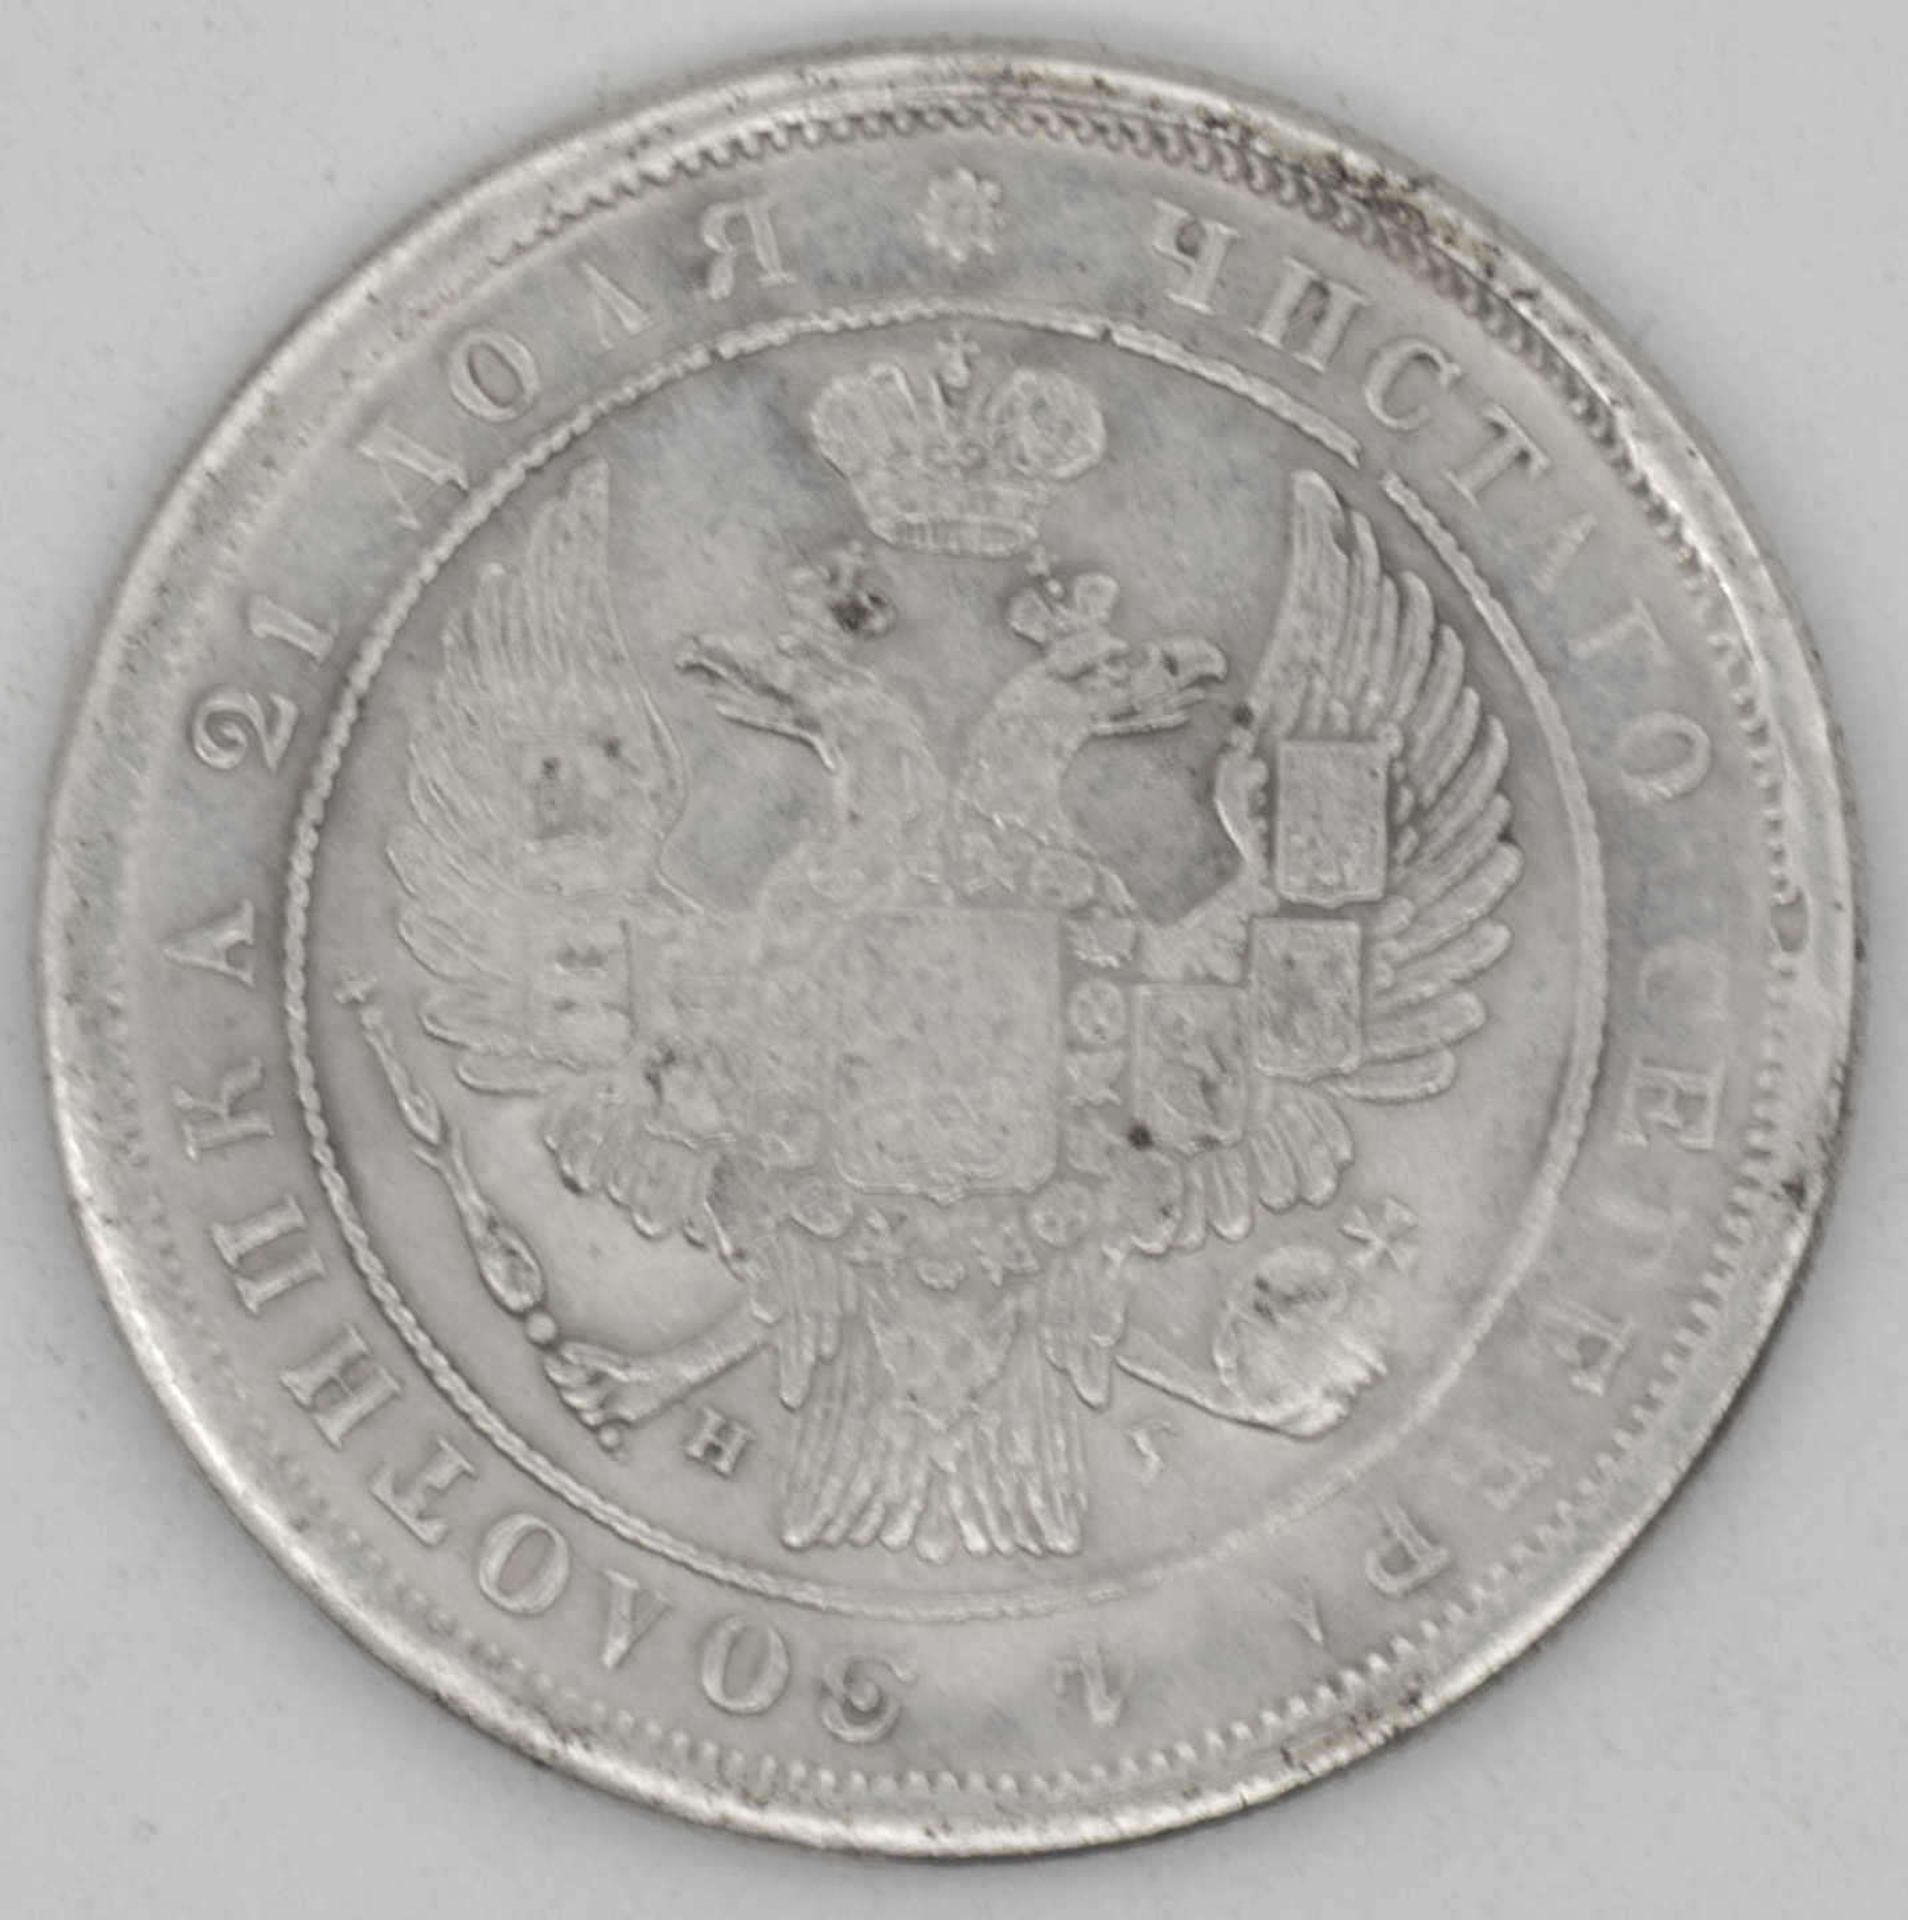 Russland 1833, St. Petersburg, 1 Rubel - Silbermünze "Zar Nikolaus I. (1825 - 1855)". Qualität: s - Bild 2 aus 2